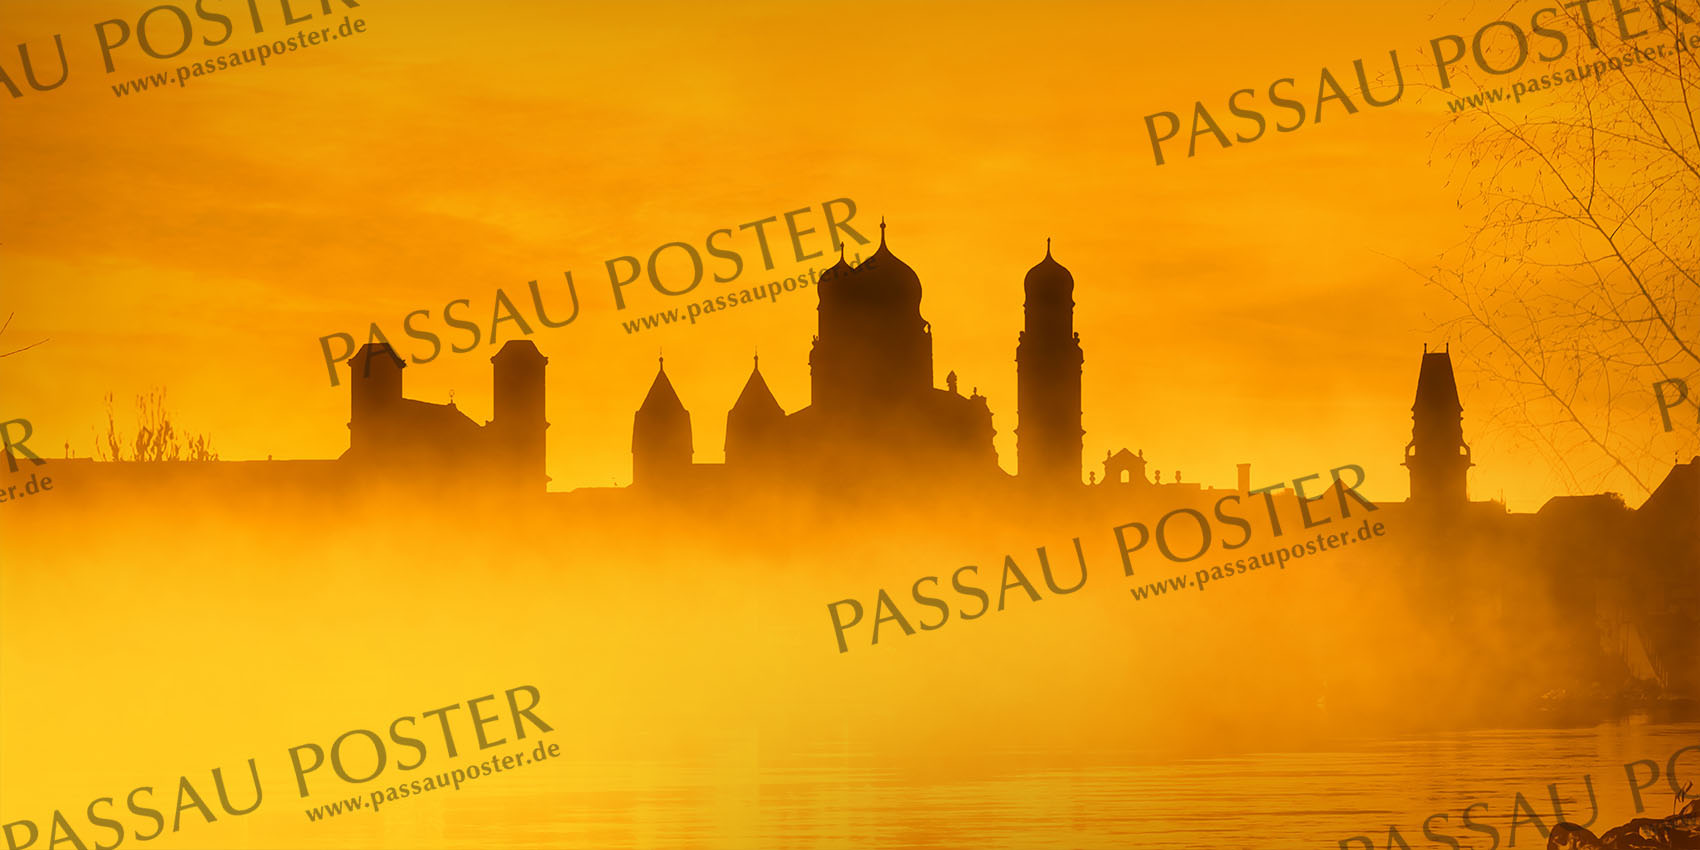 Passau Poster - Passau im Nebel